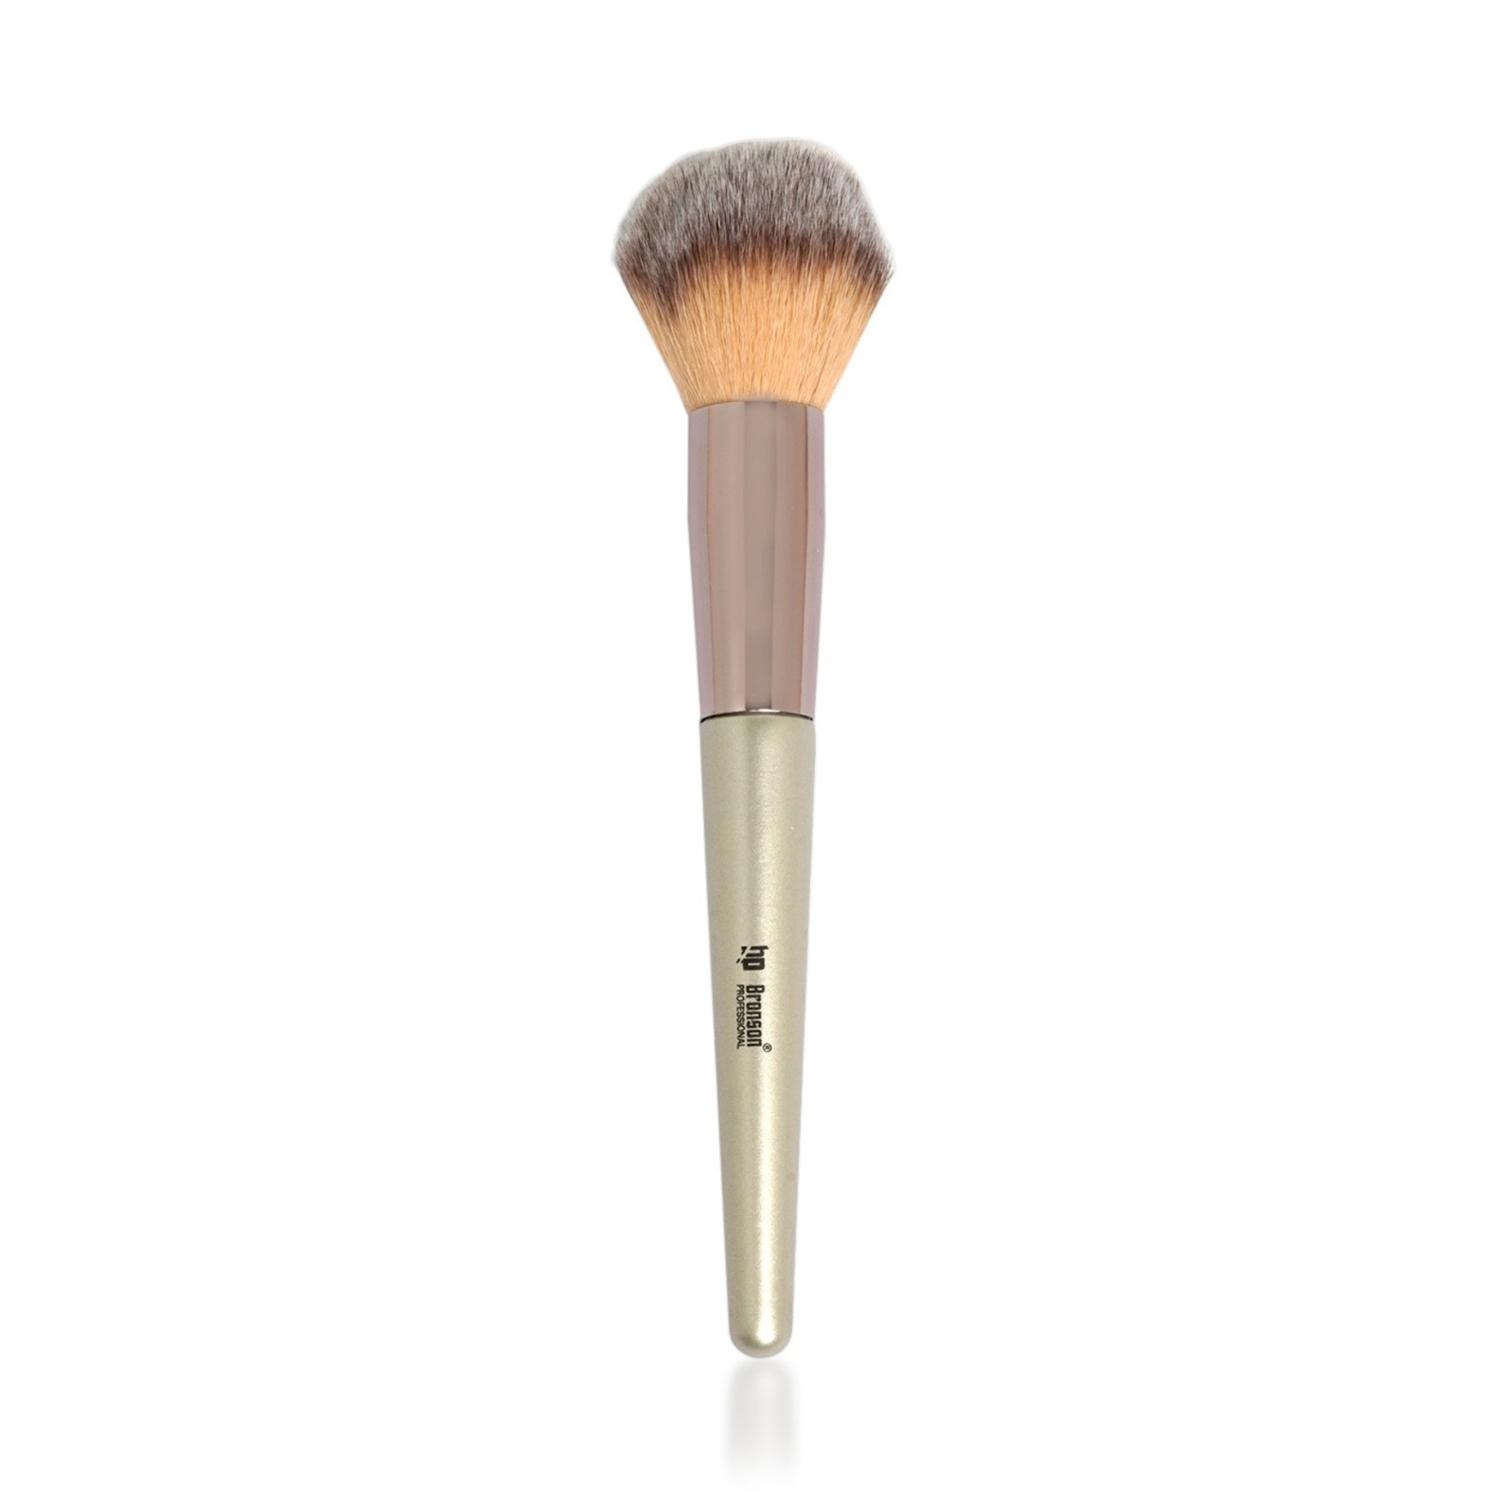 Bronson Professional Classic Fat Powder Makeup Brush - Silver, Pink